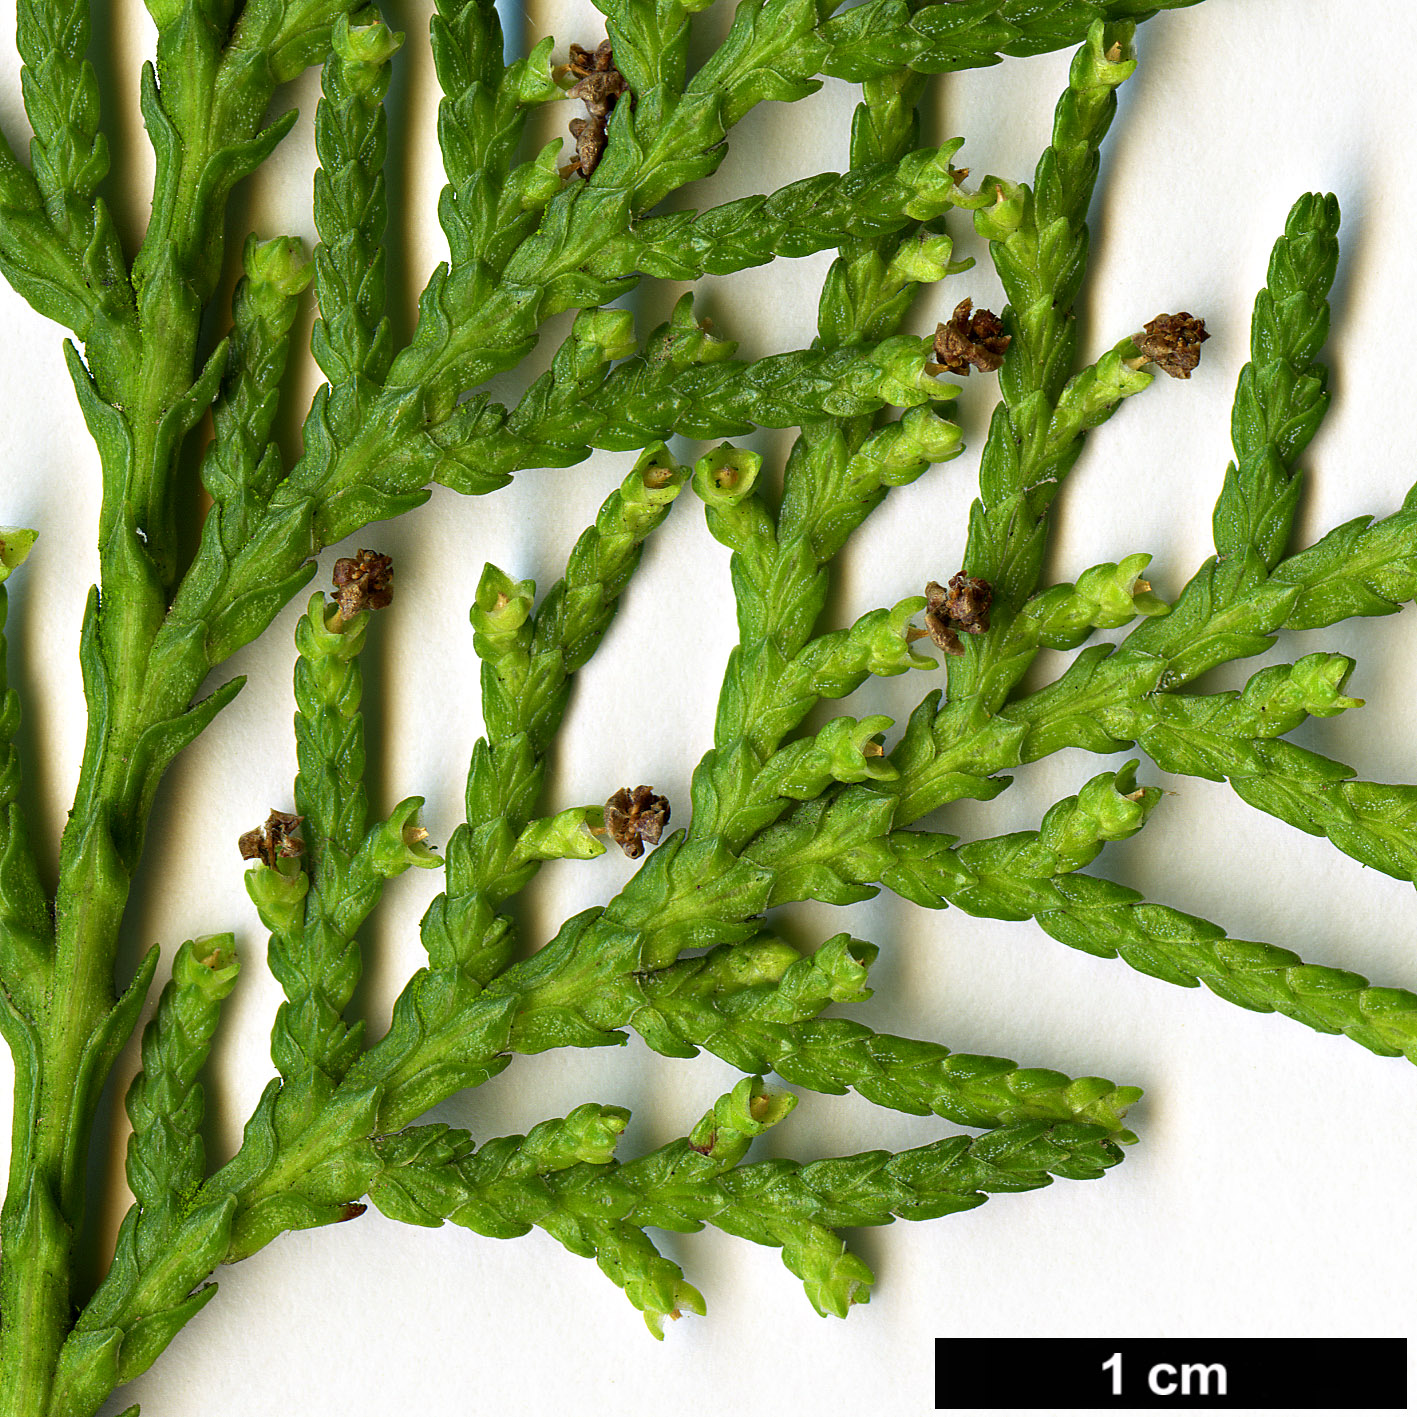 High resolution image: Family: Cupressaceae - Genus: Platycladus - Taxon: orientalis - SpeciesSub: var. xianshanensis